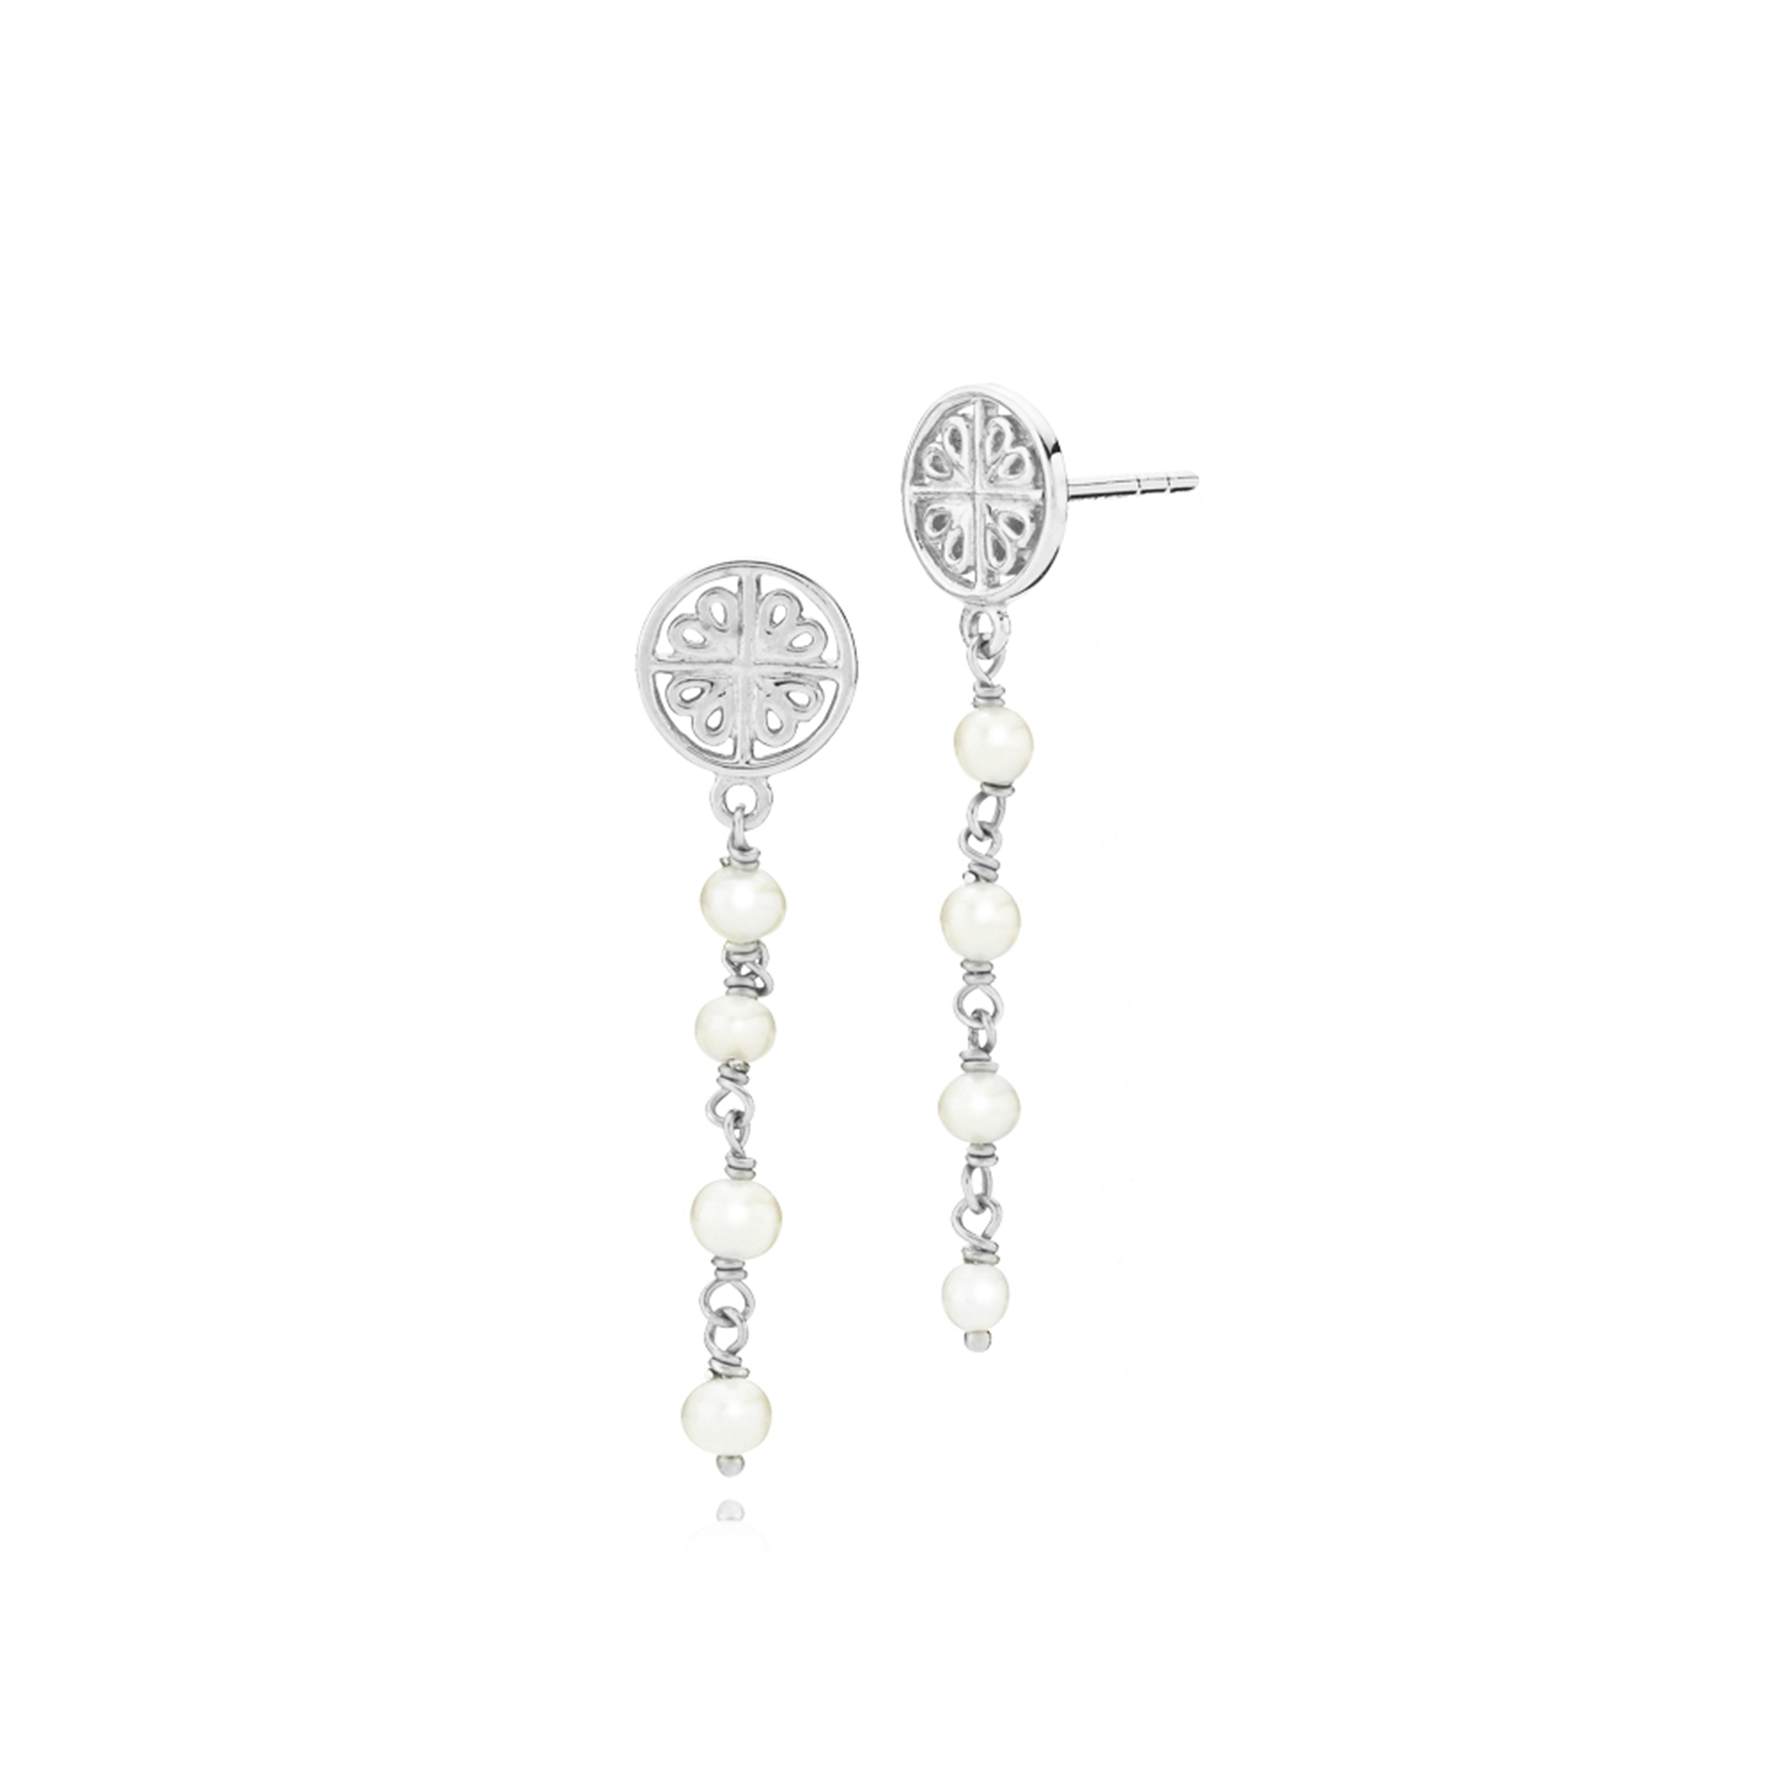 Balance Earrings With Pearl från Sistie i Silver Sterling 925|Freshwater Pearl|Blank